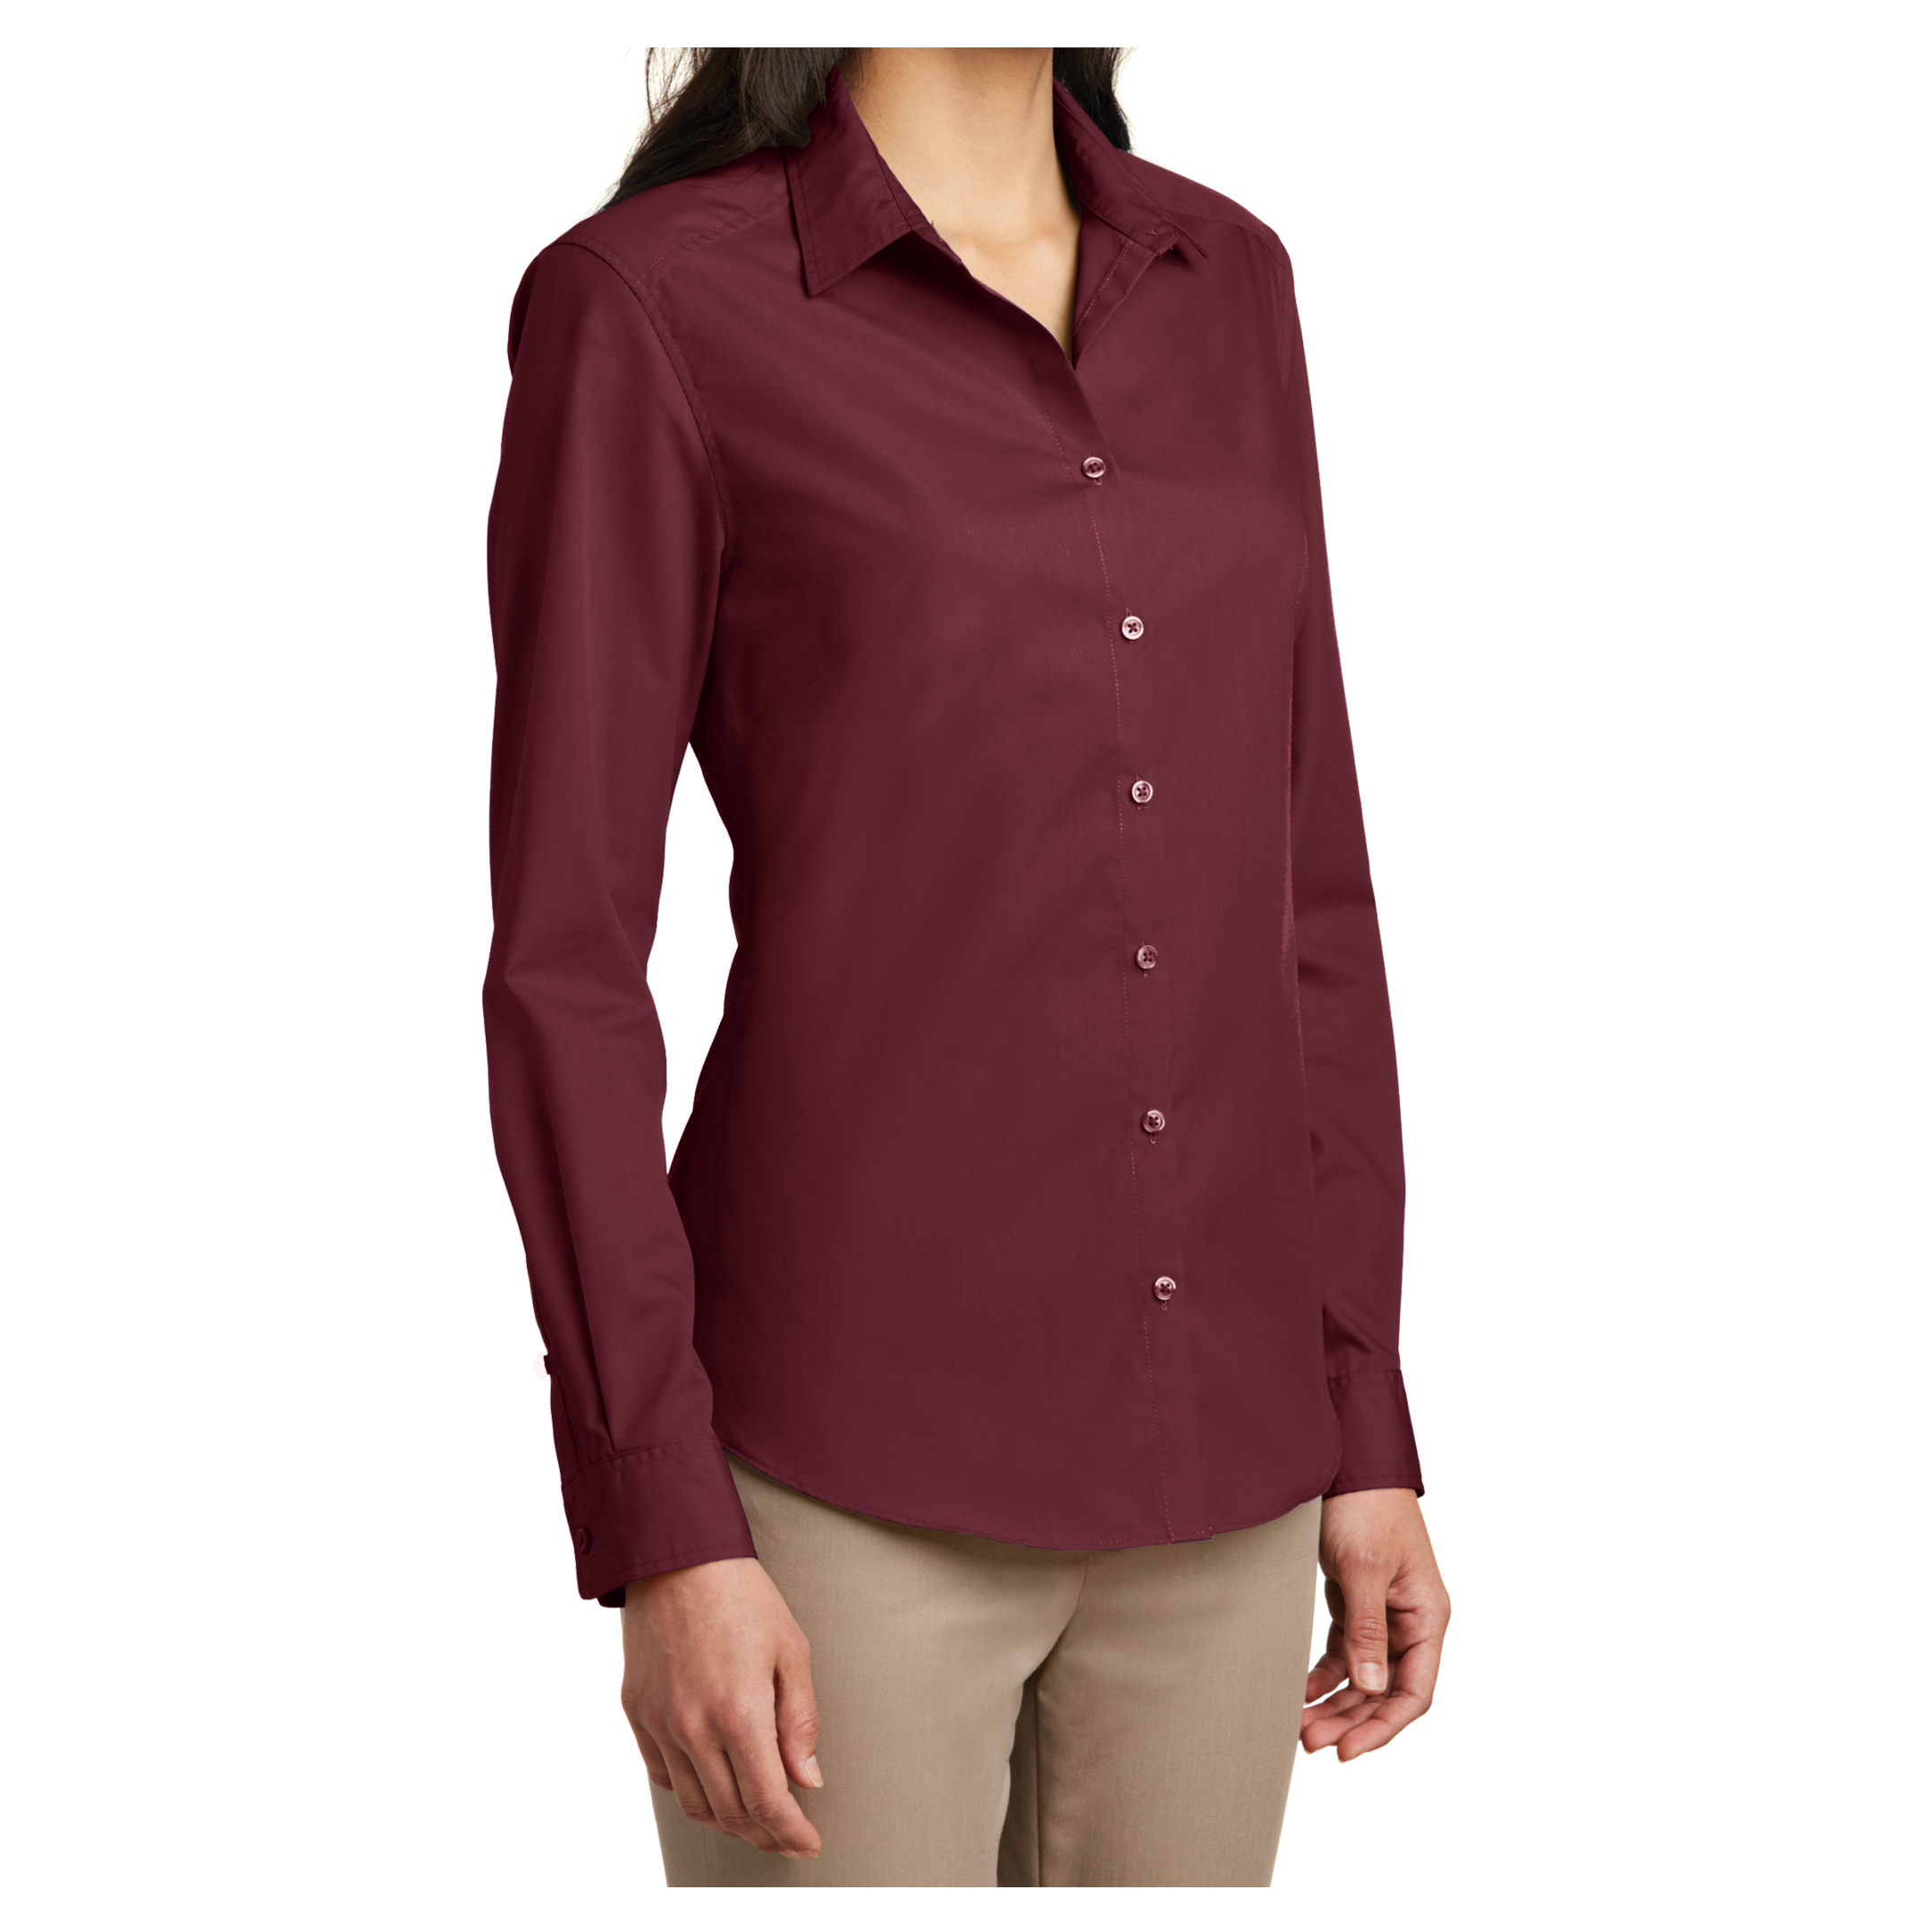 Mafoose Women Cotton/Polyester Female Shirt Burgundy XS - image 2 of 6